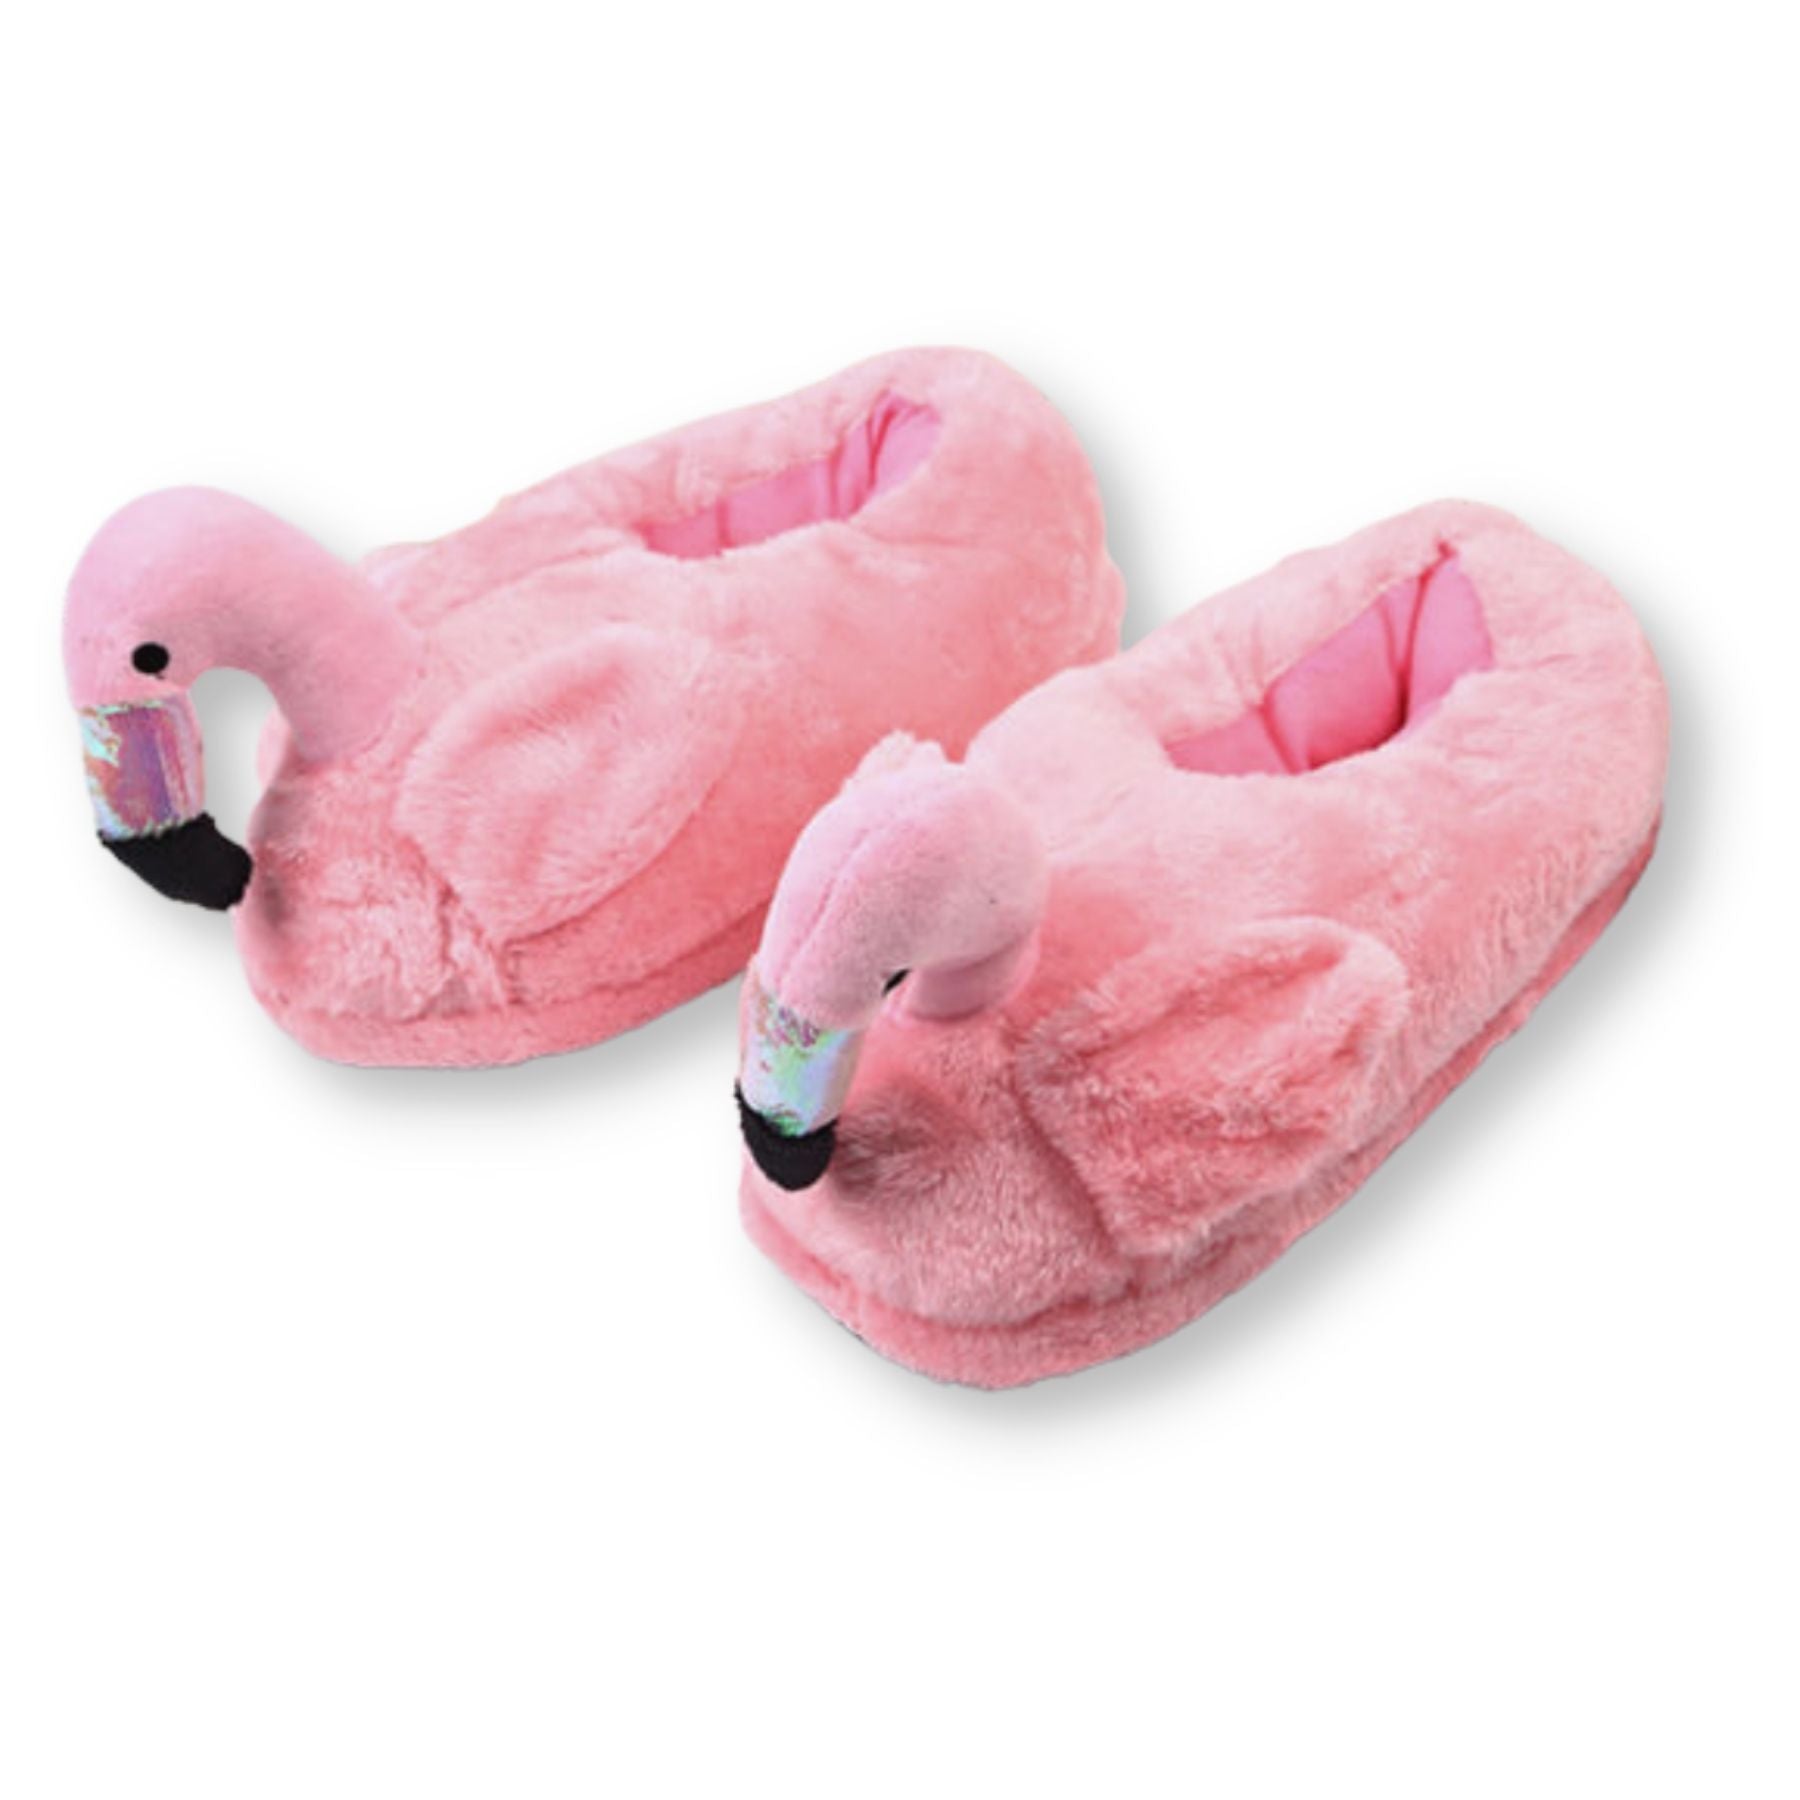 Cute Women's Flamingo Slippers Pink Fuzzy Flamingo House Shoes